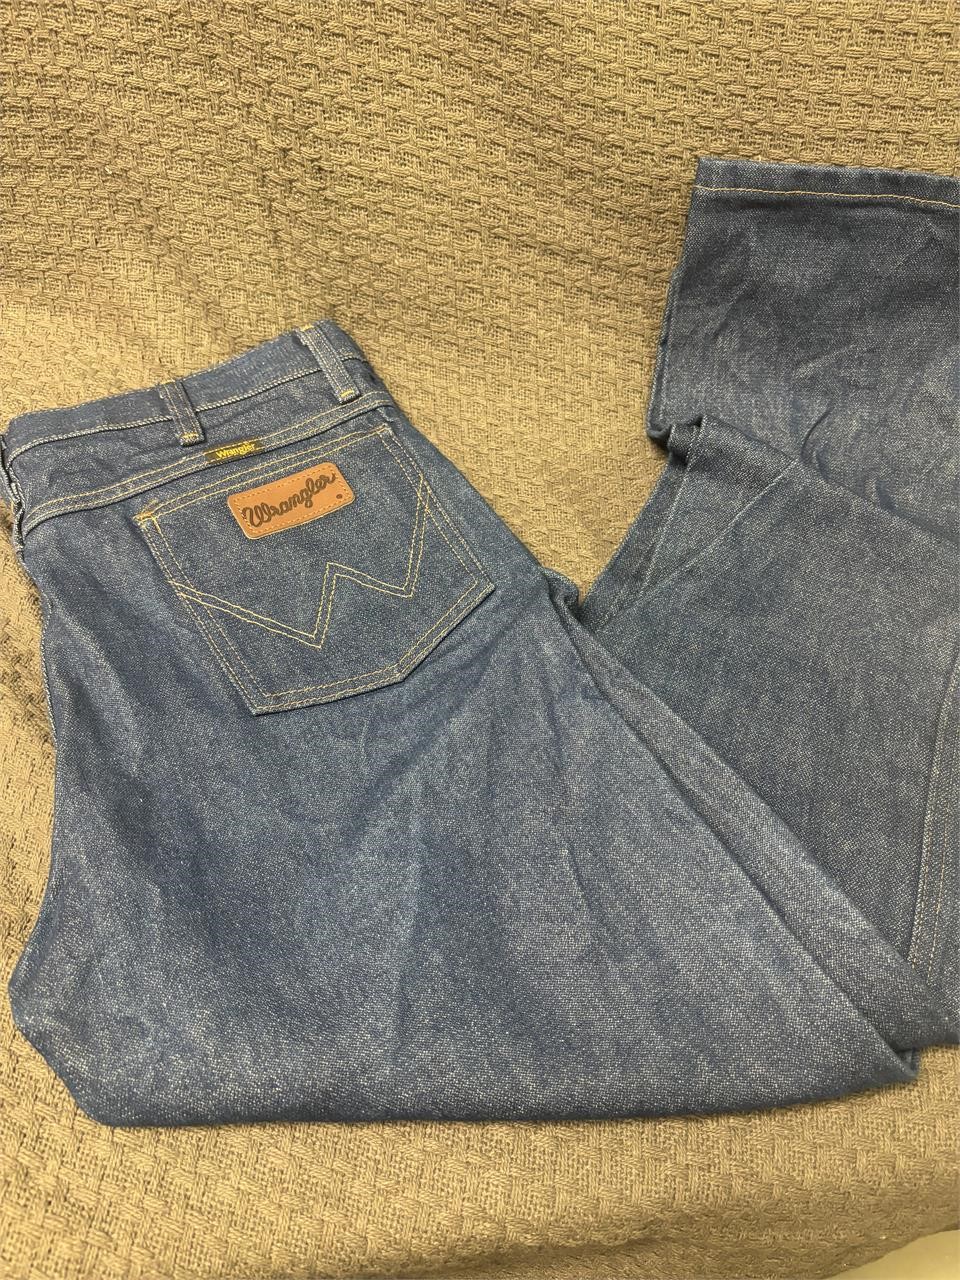 Wrangler 34x32 jeans